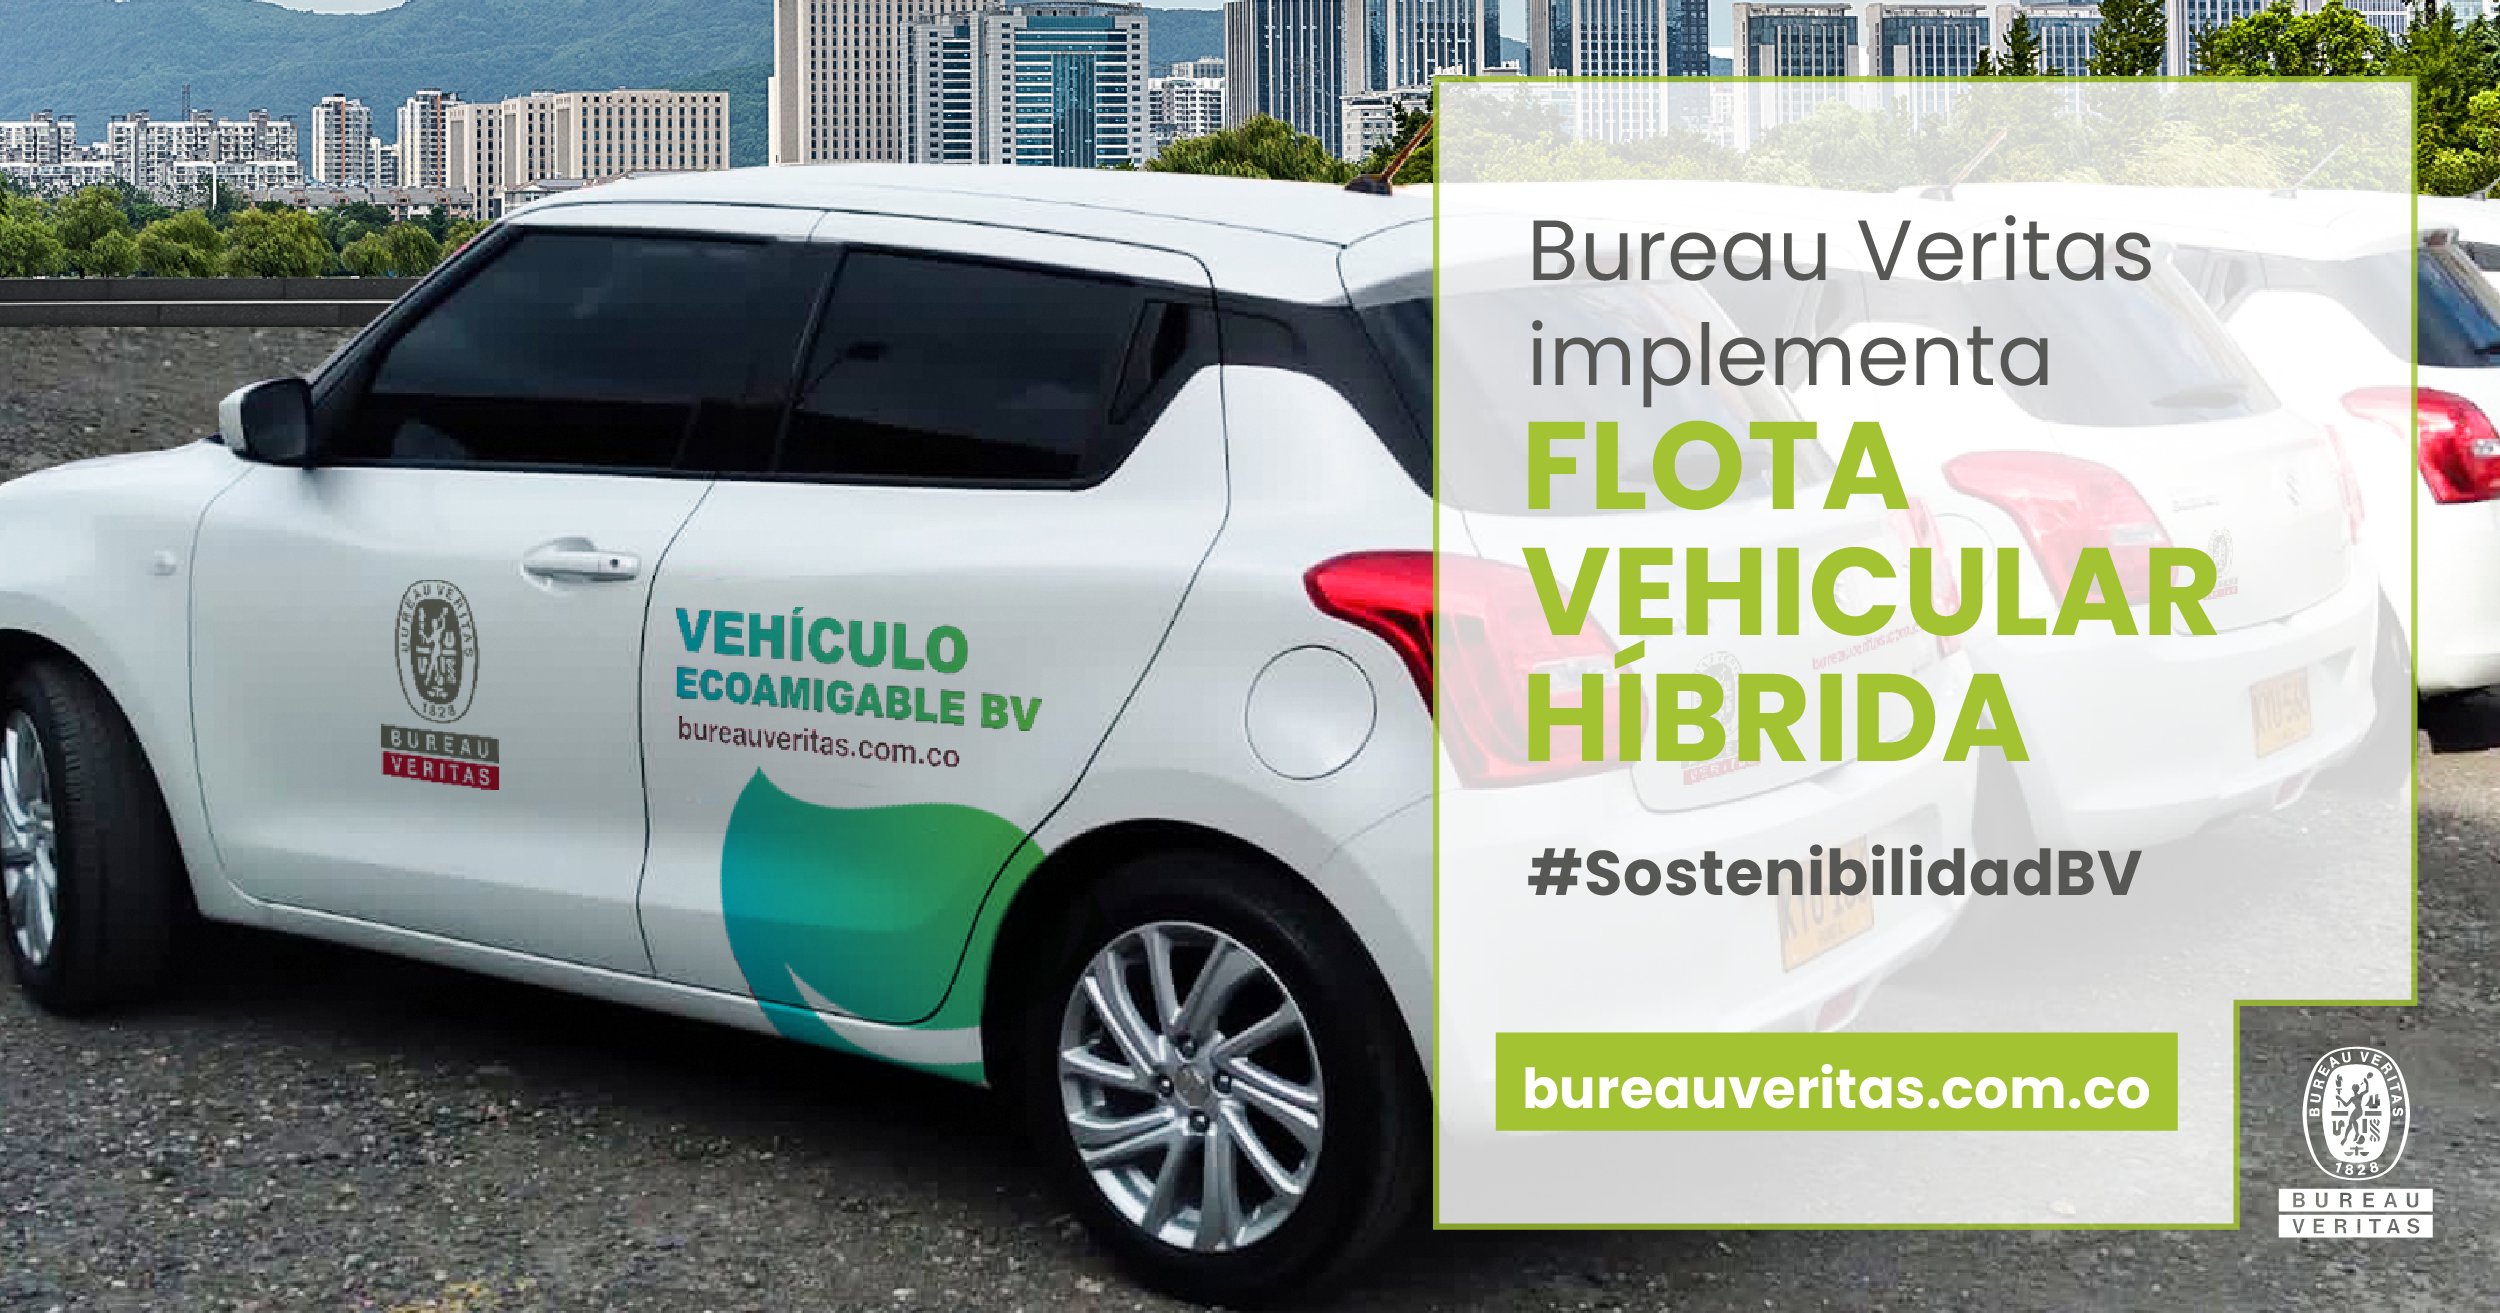 Bureau Veritas CO (@BureauVeritasCO) / Twitter